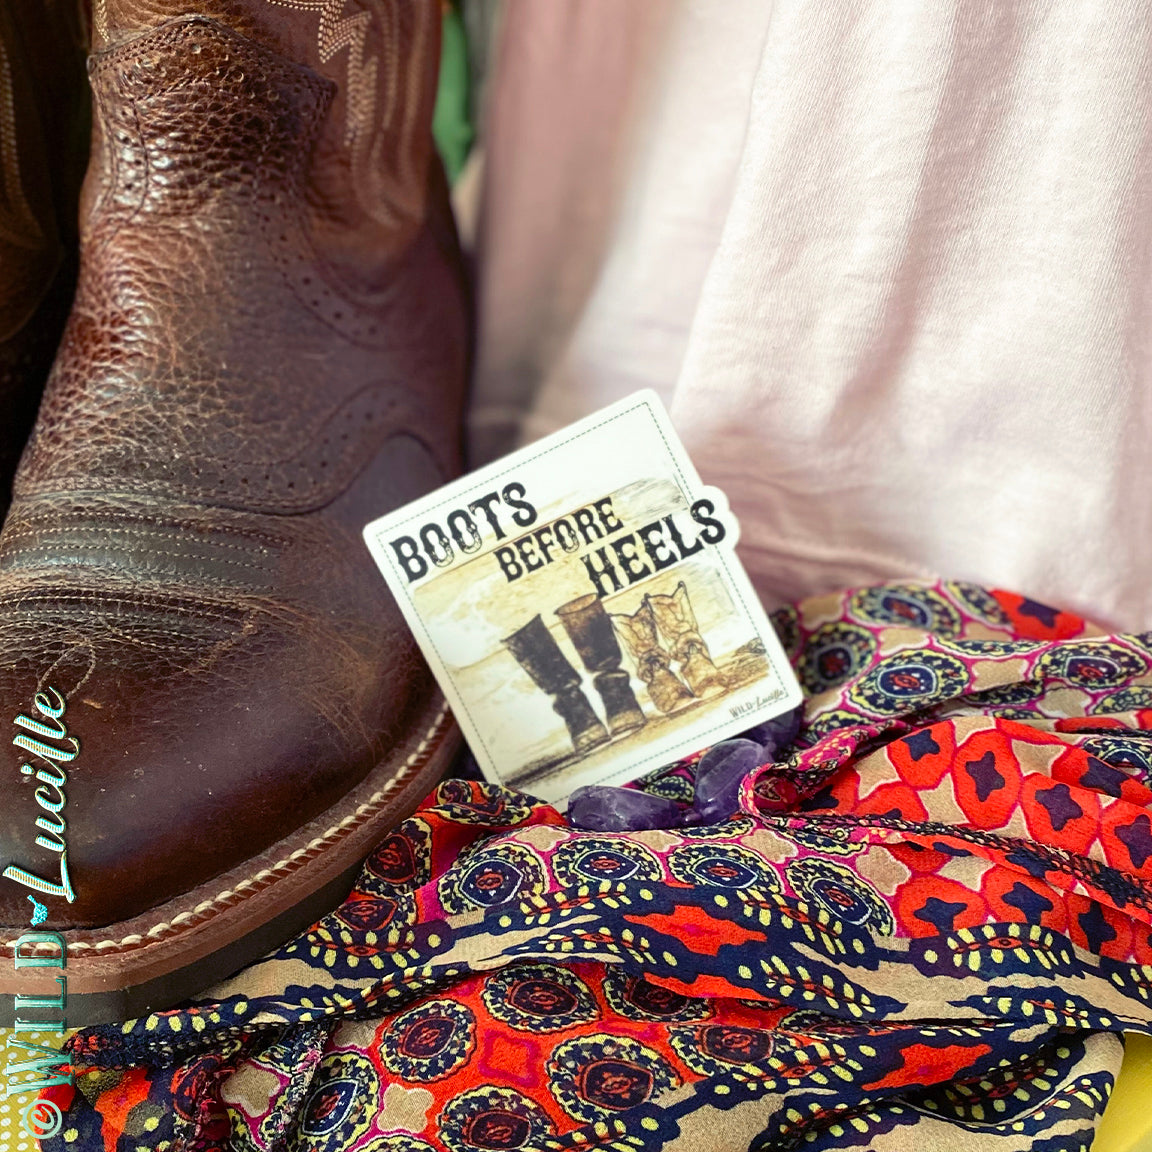 Boots Before Heels - Western Cowgirl Vinyl Sticker Decals